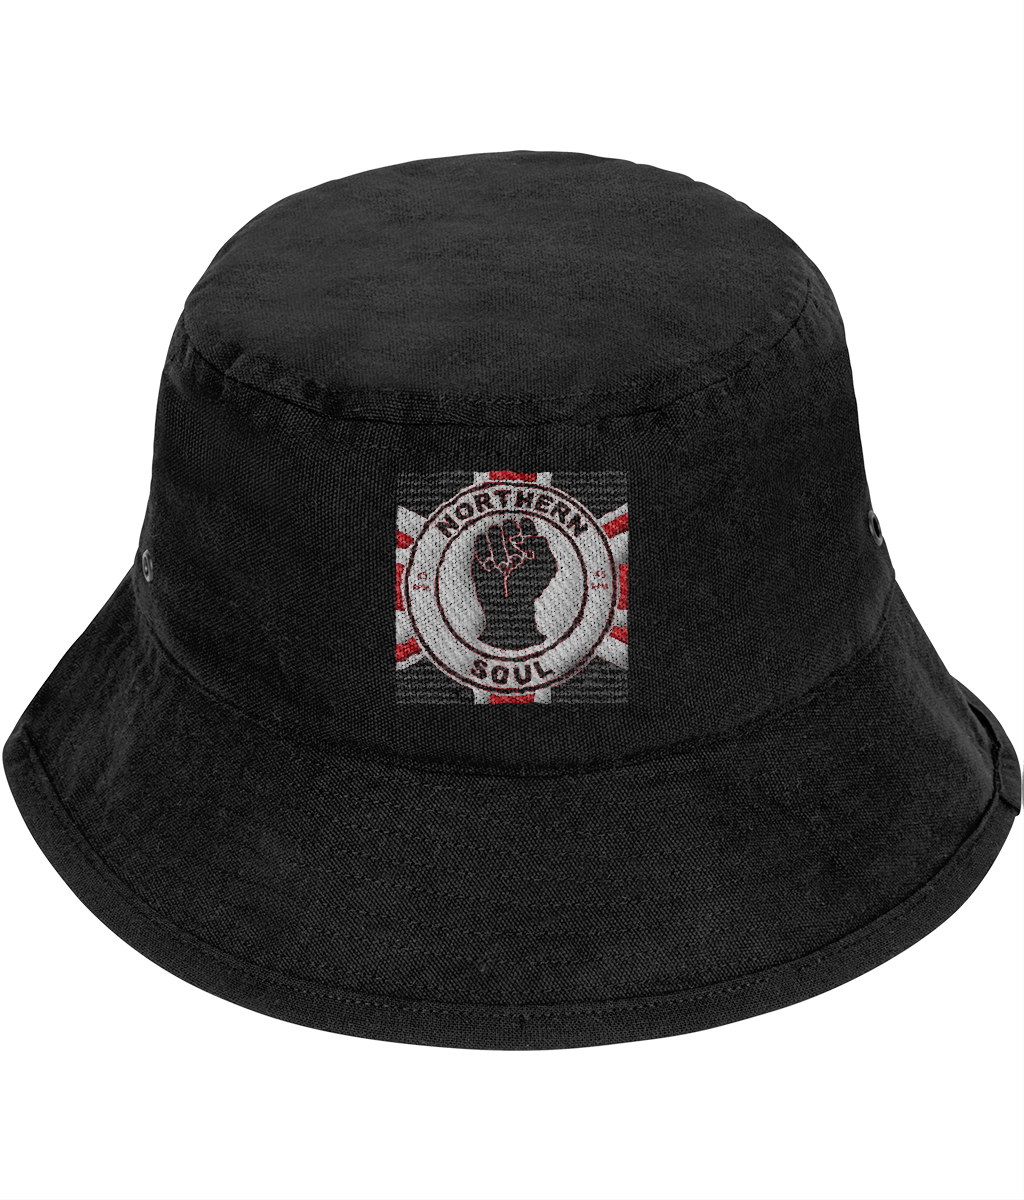 Union Jack Northern Soul Bucket Hat